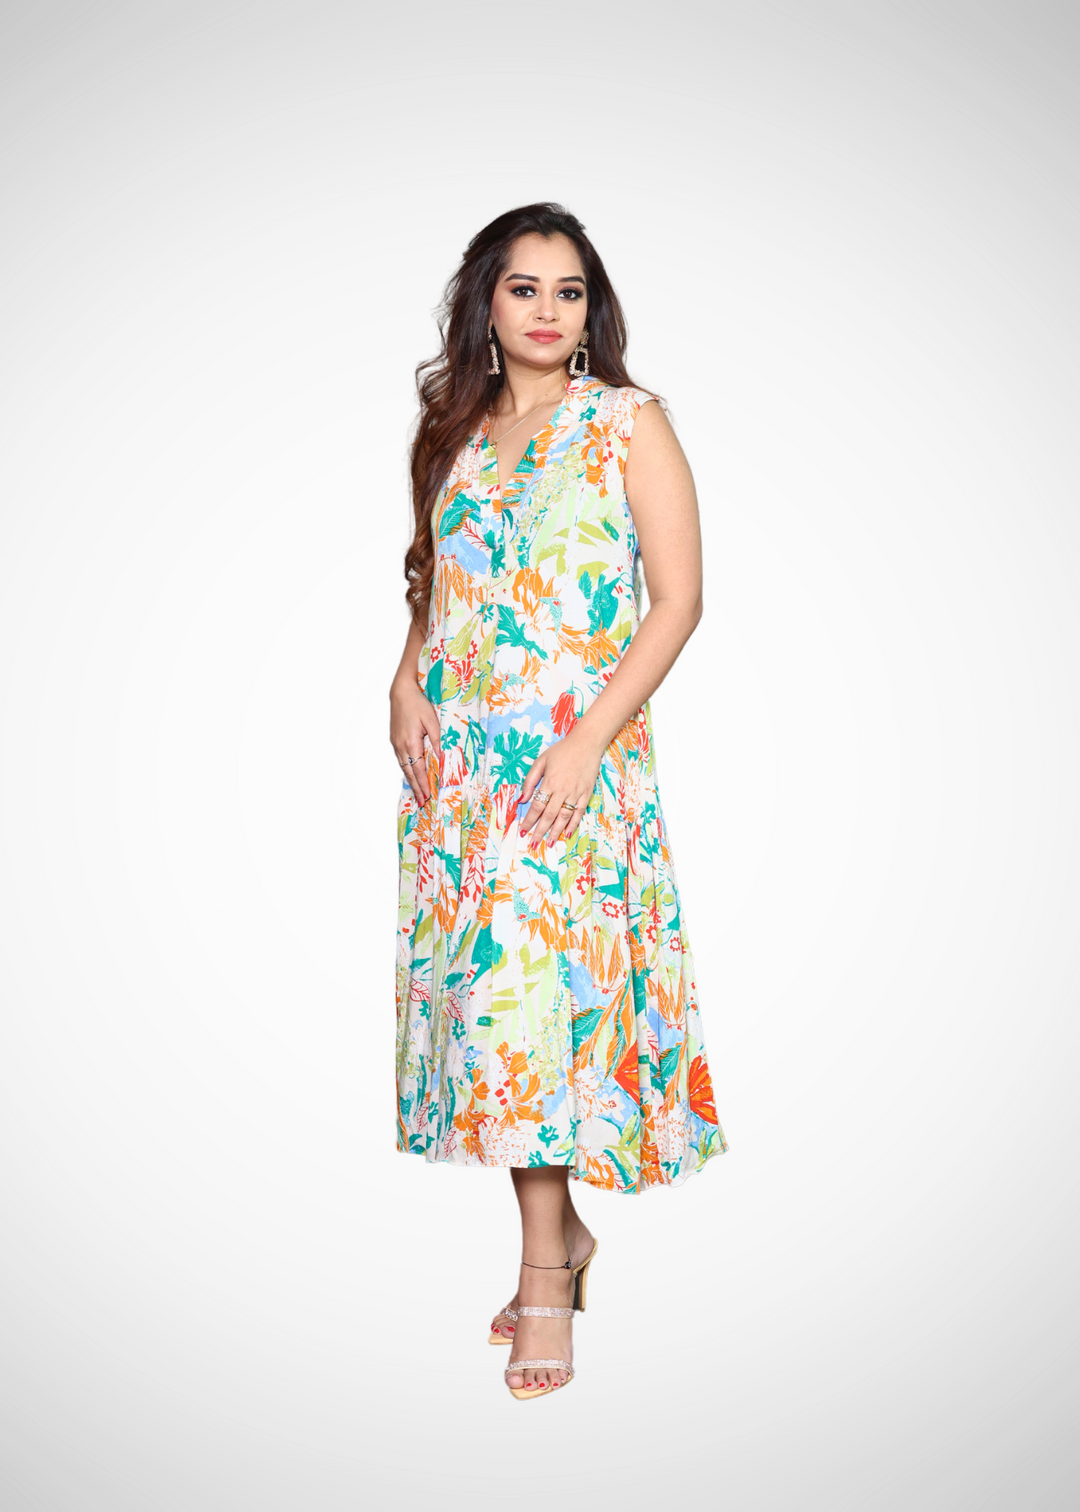 Alish Sleeveless Multi Color Summer Dress RMFH